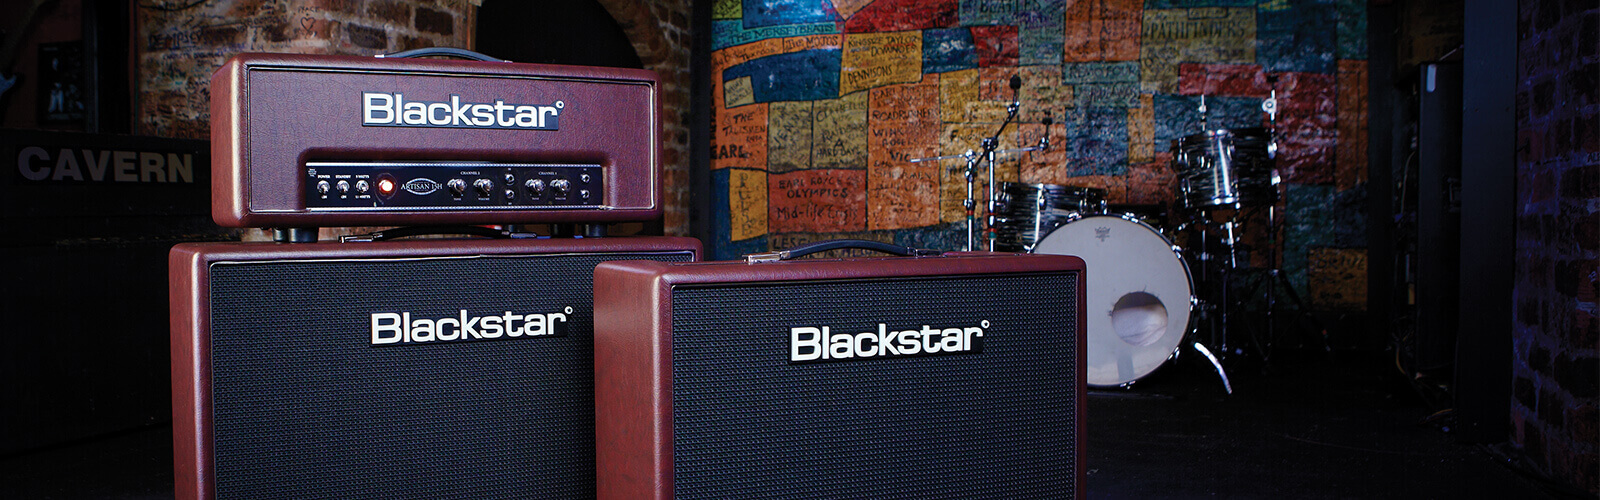 Blackstar Amps Series